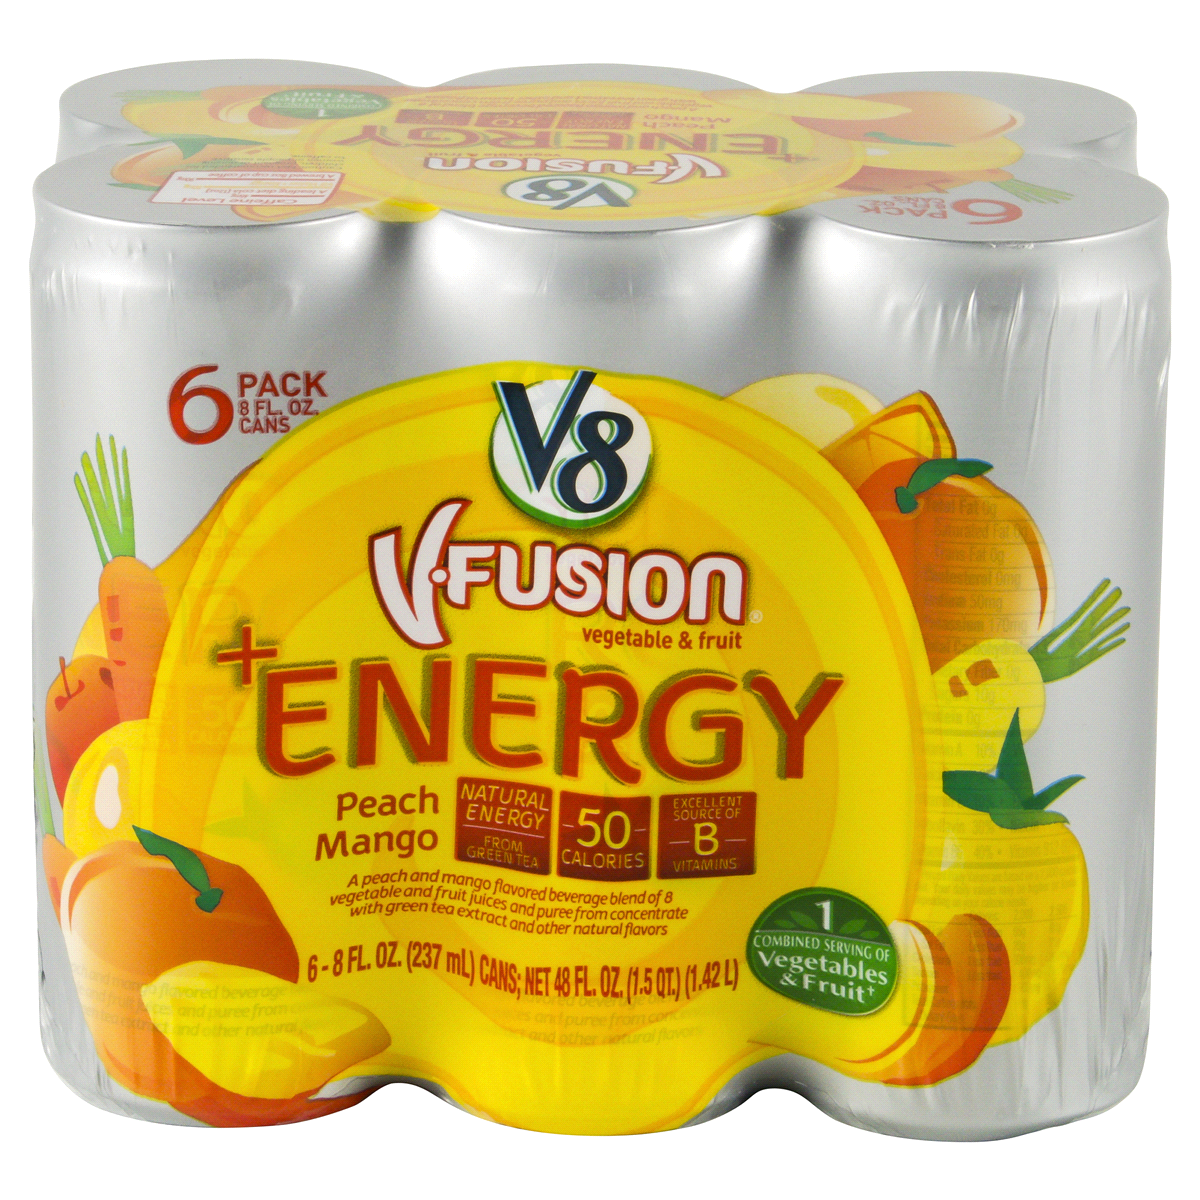 slide 5 of 9, V8 Vfusion Energy Peach Mango Vegetable Fruit Juice, 6 ct; 8 oz